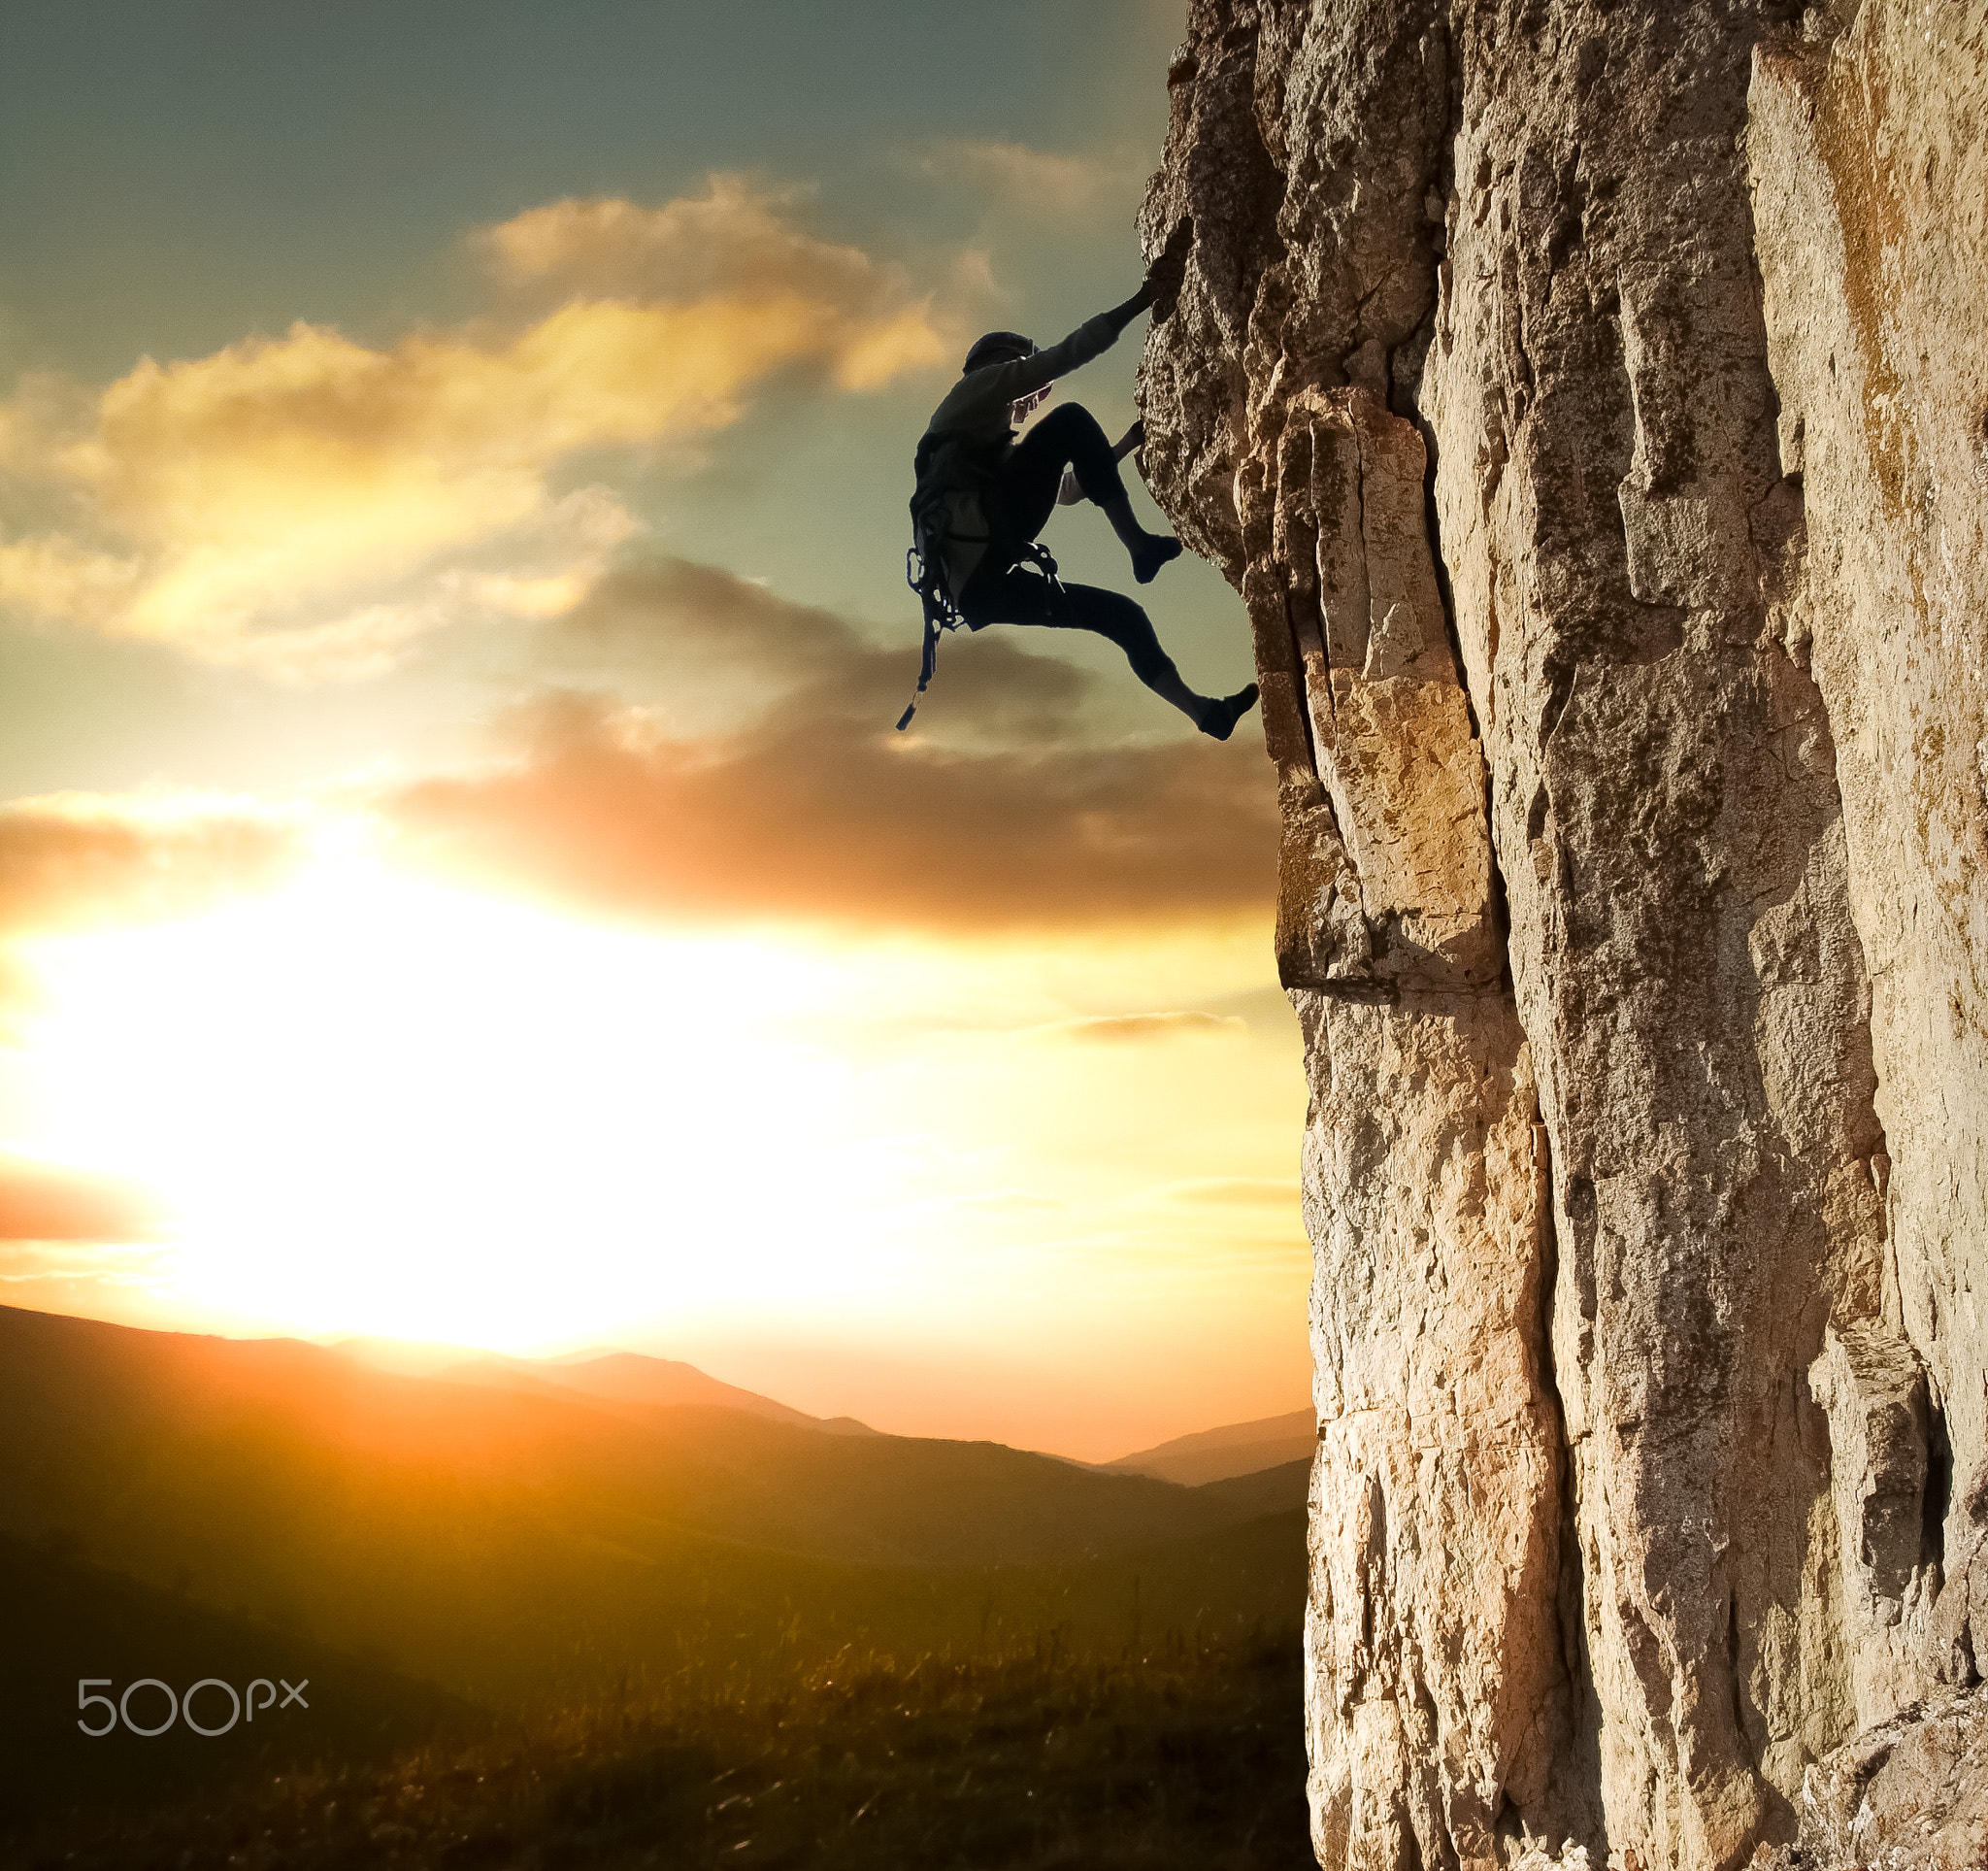 climber on sunset